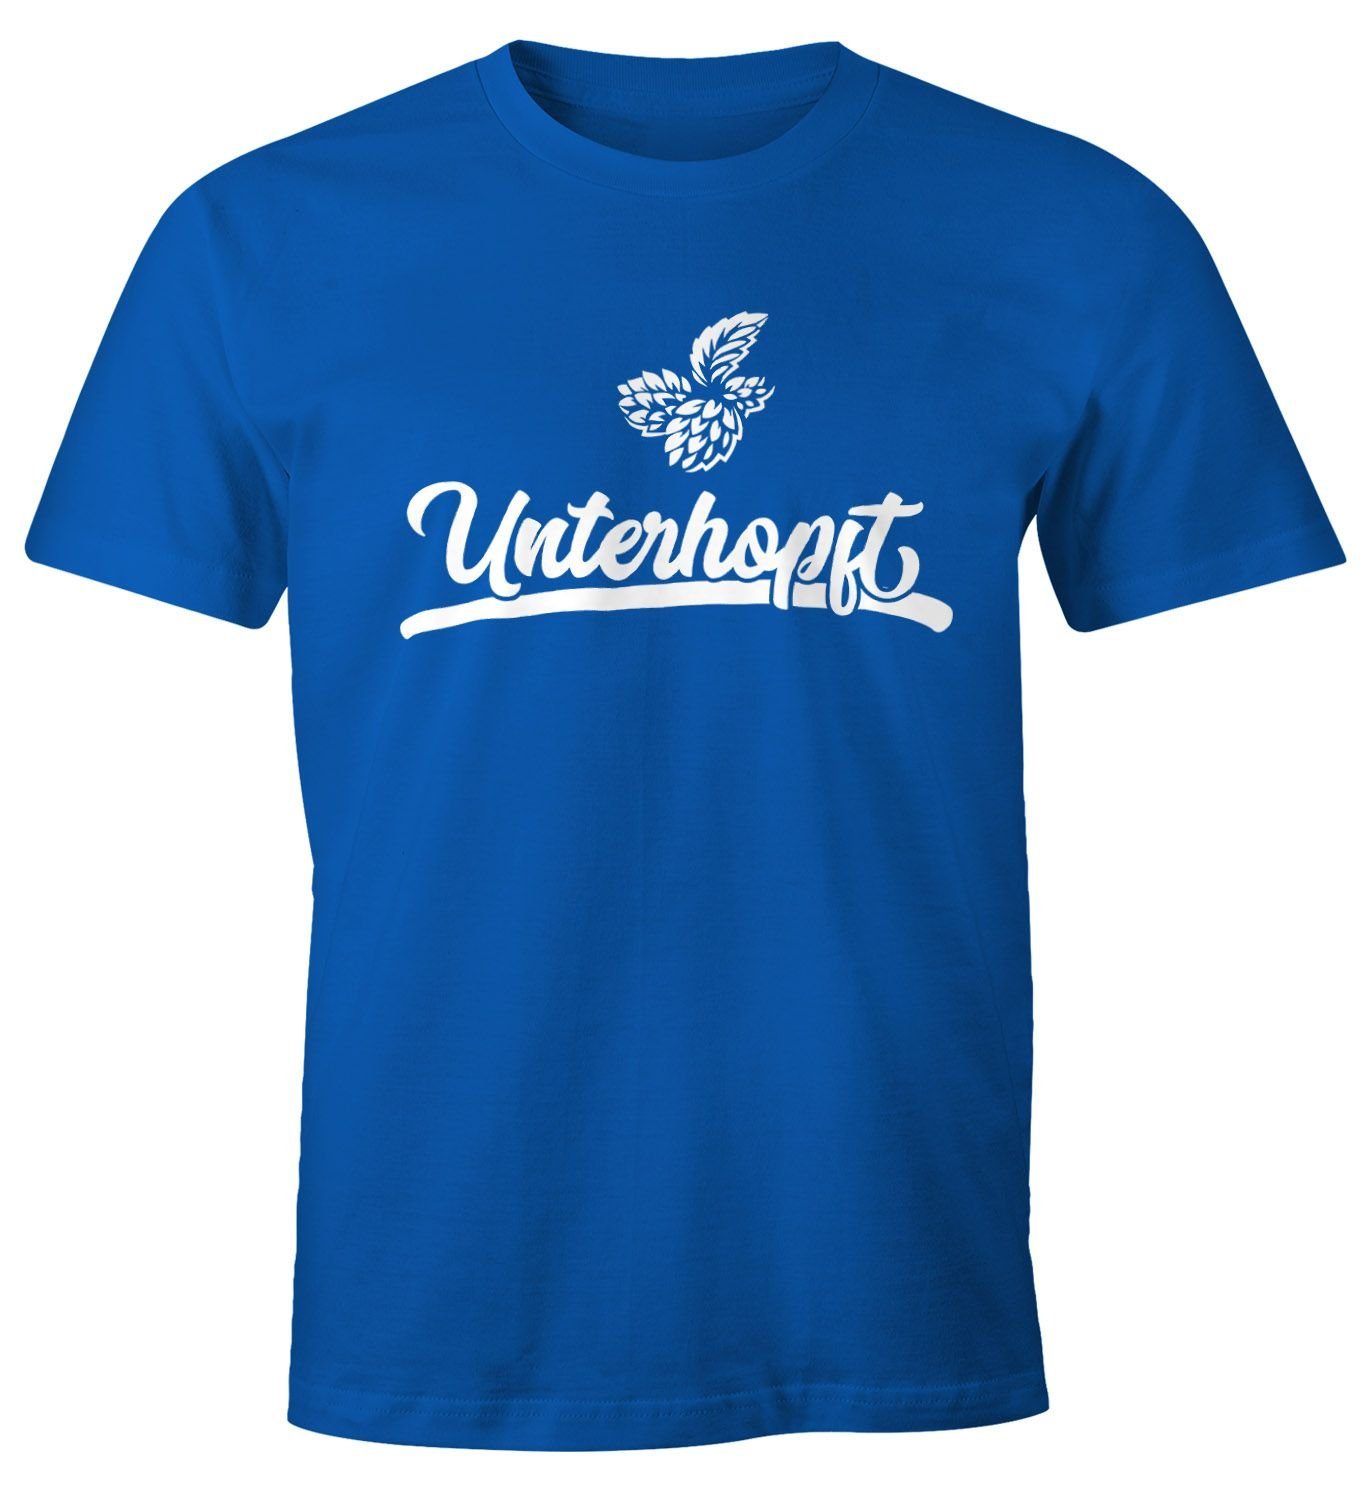 MoonWorks Print-Shirt Herren Party T-Shirt Unterhopft Bier Fun-Shirt Moonworks® mit Print blau | T-Shirts